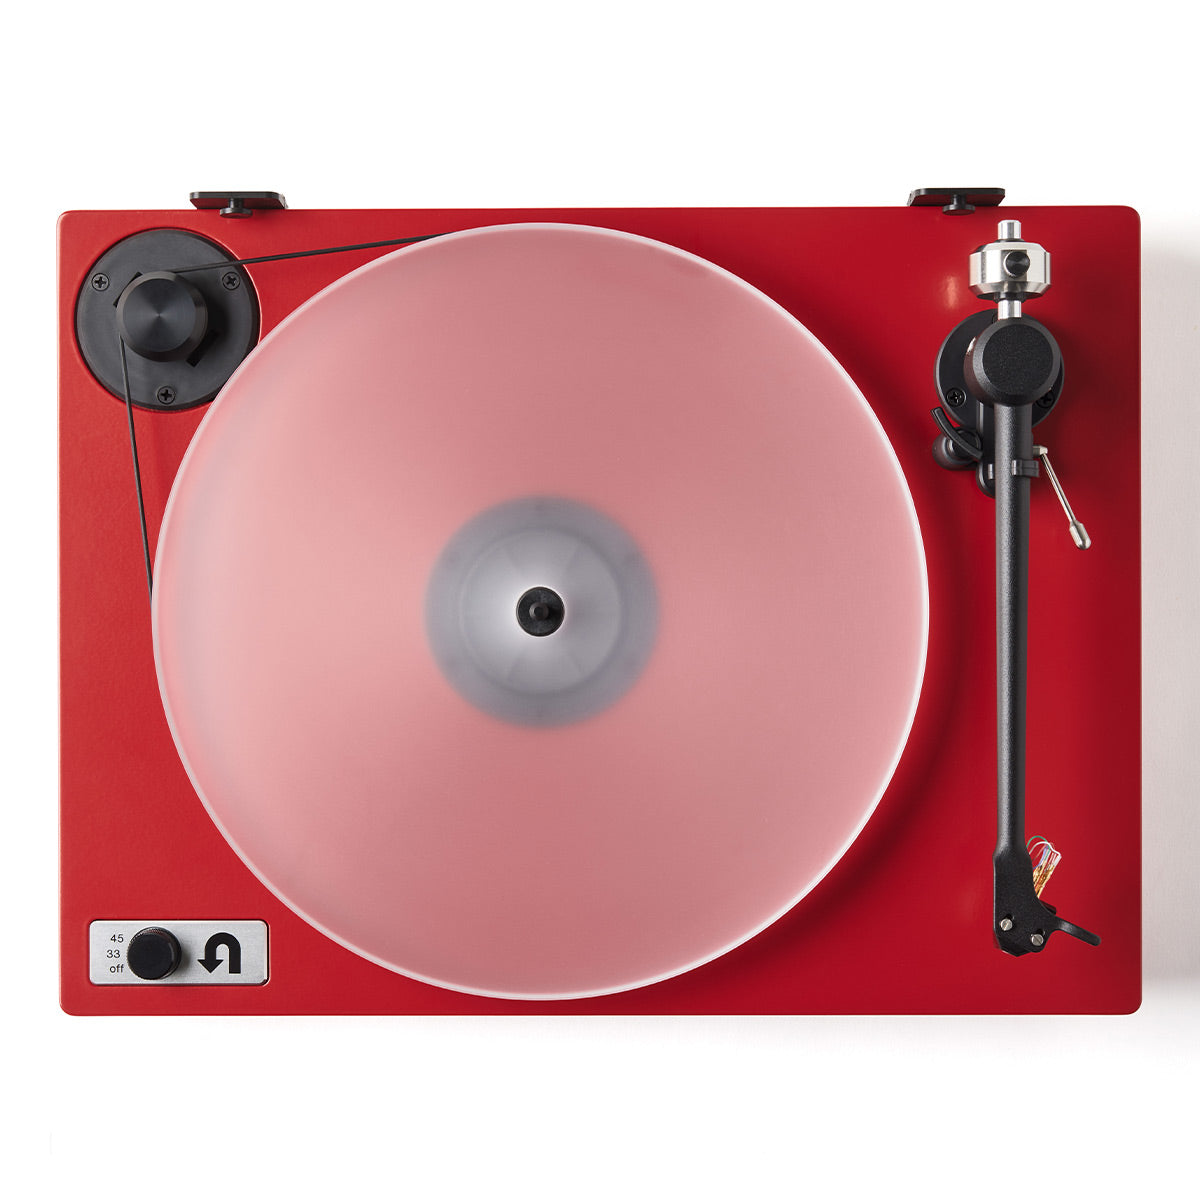 U-Turn Audio Orbit 2 Special Turntable with Ortofon 2M Red Cartridge (Red)